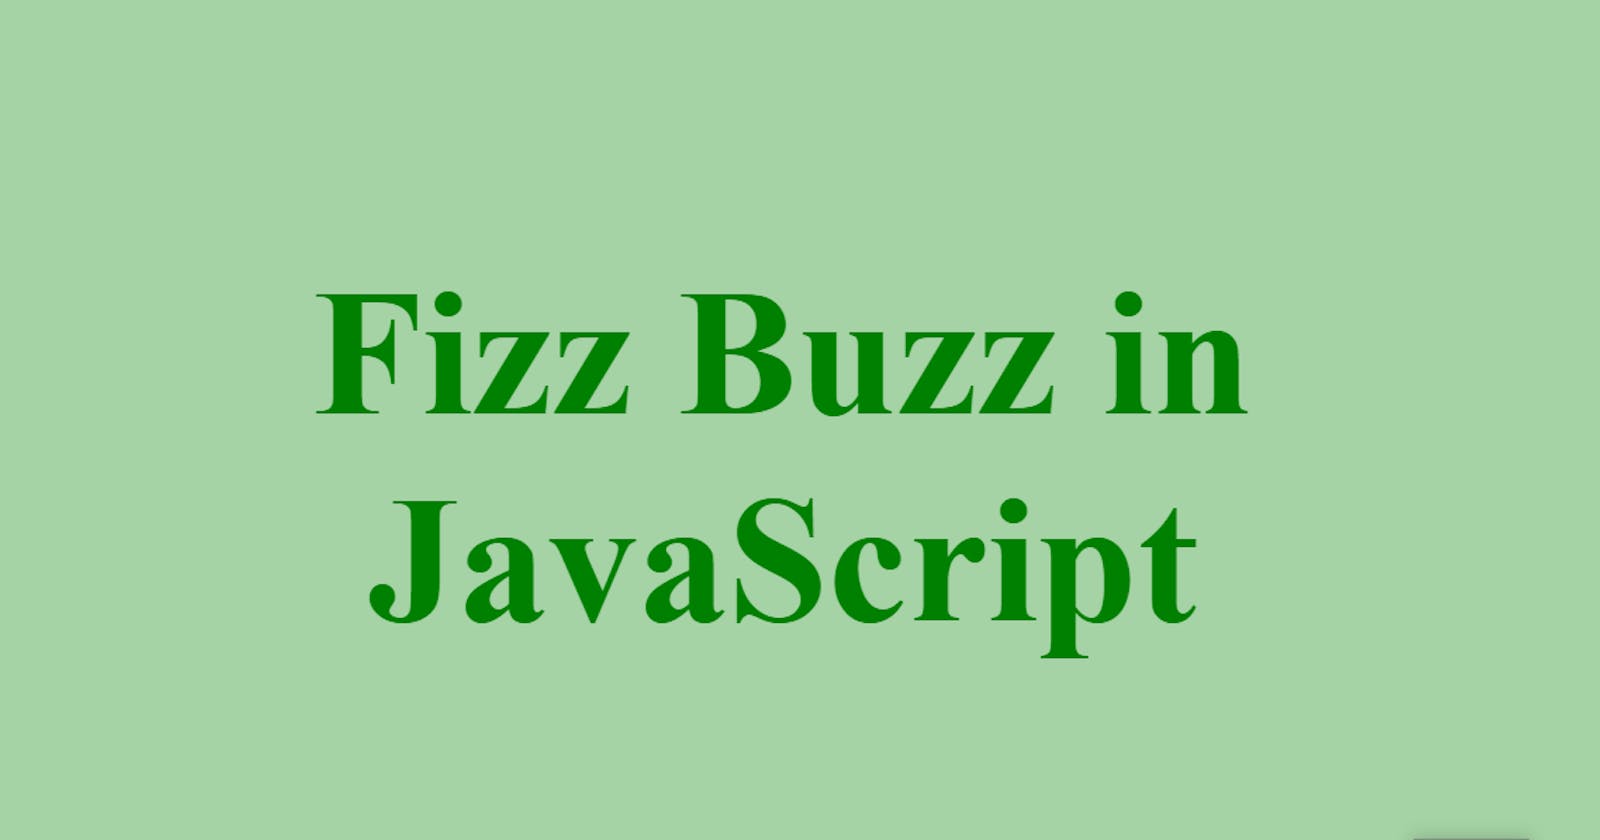 Fizz Buzz in JavaScript